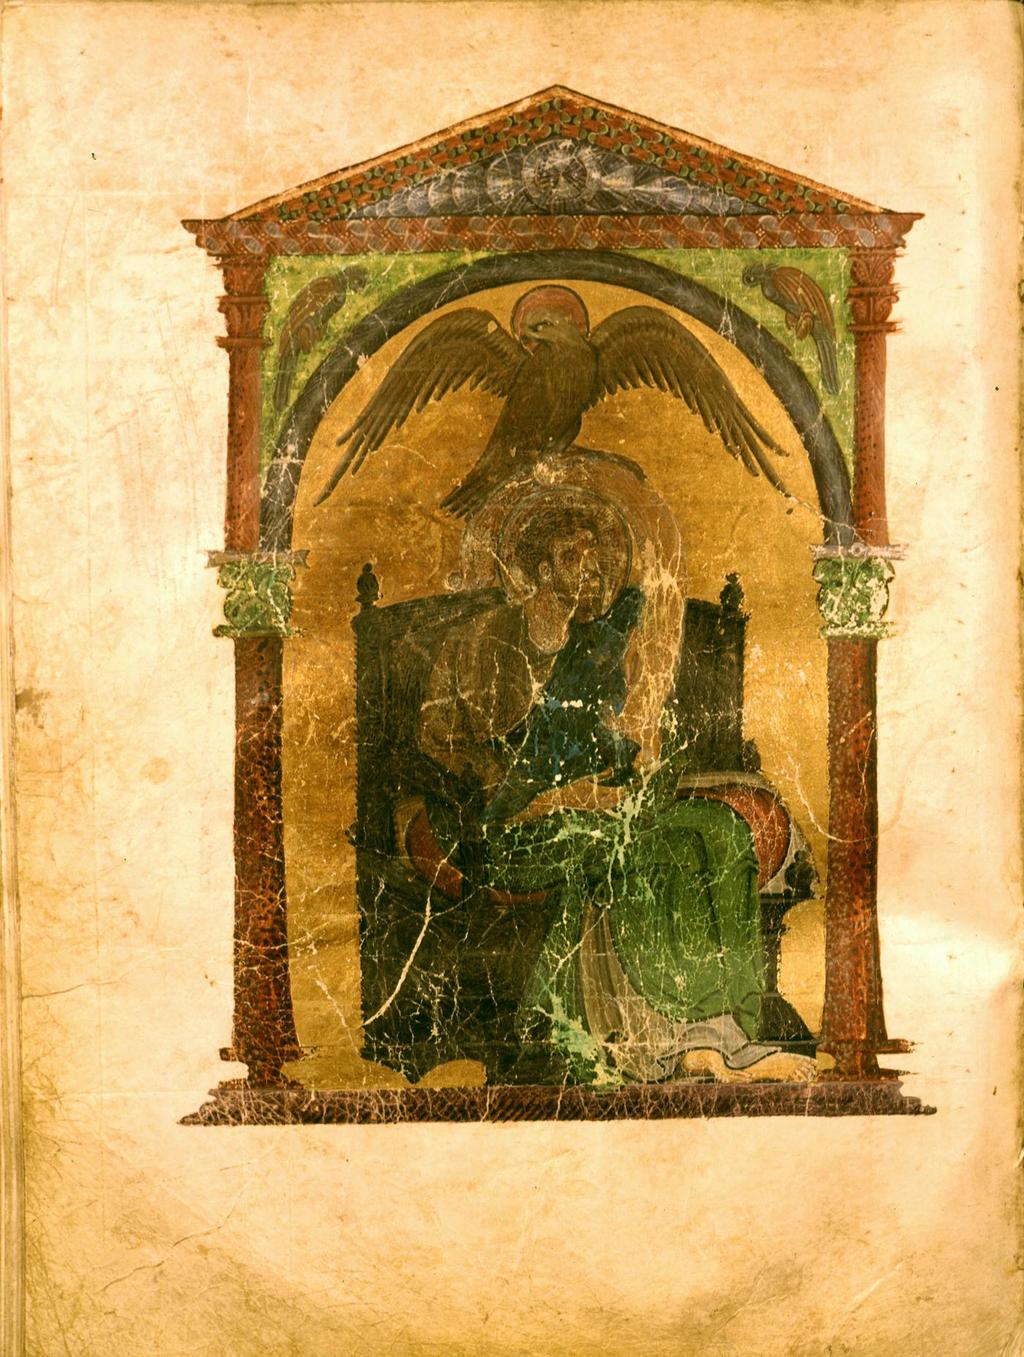 Garrison Figure 13. Evangelist John, Liuthar Gospels, manuscript, c. 990, 29.8 cm x 21.5cm.